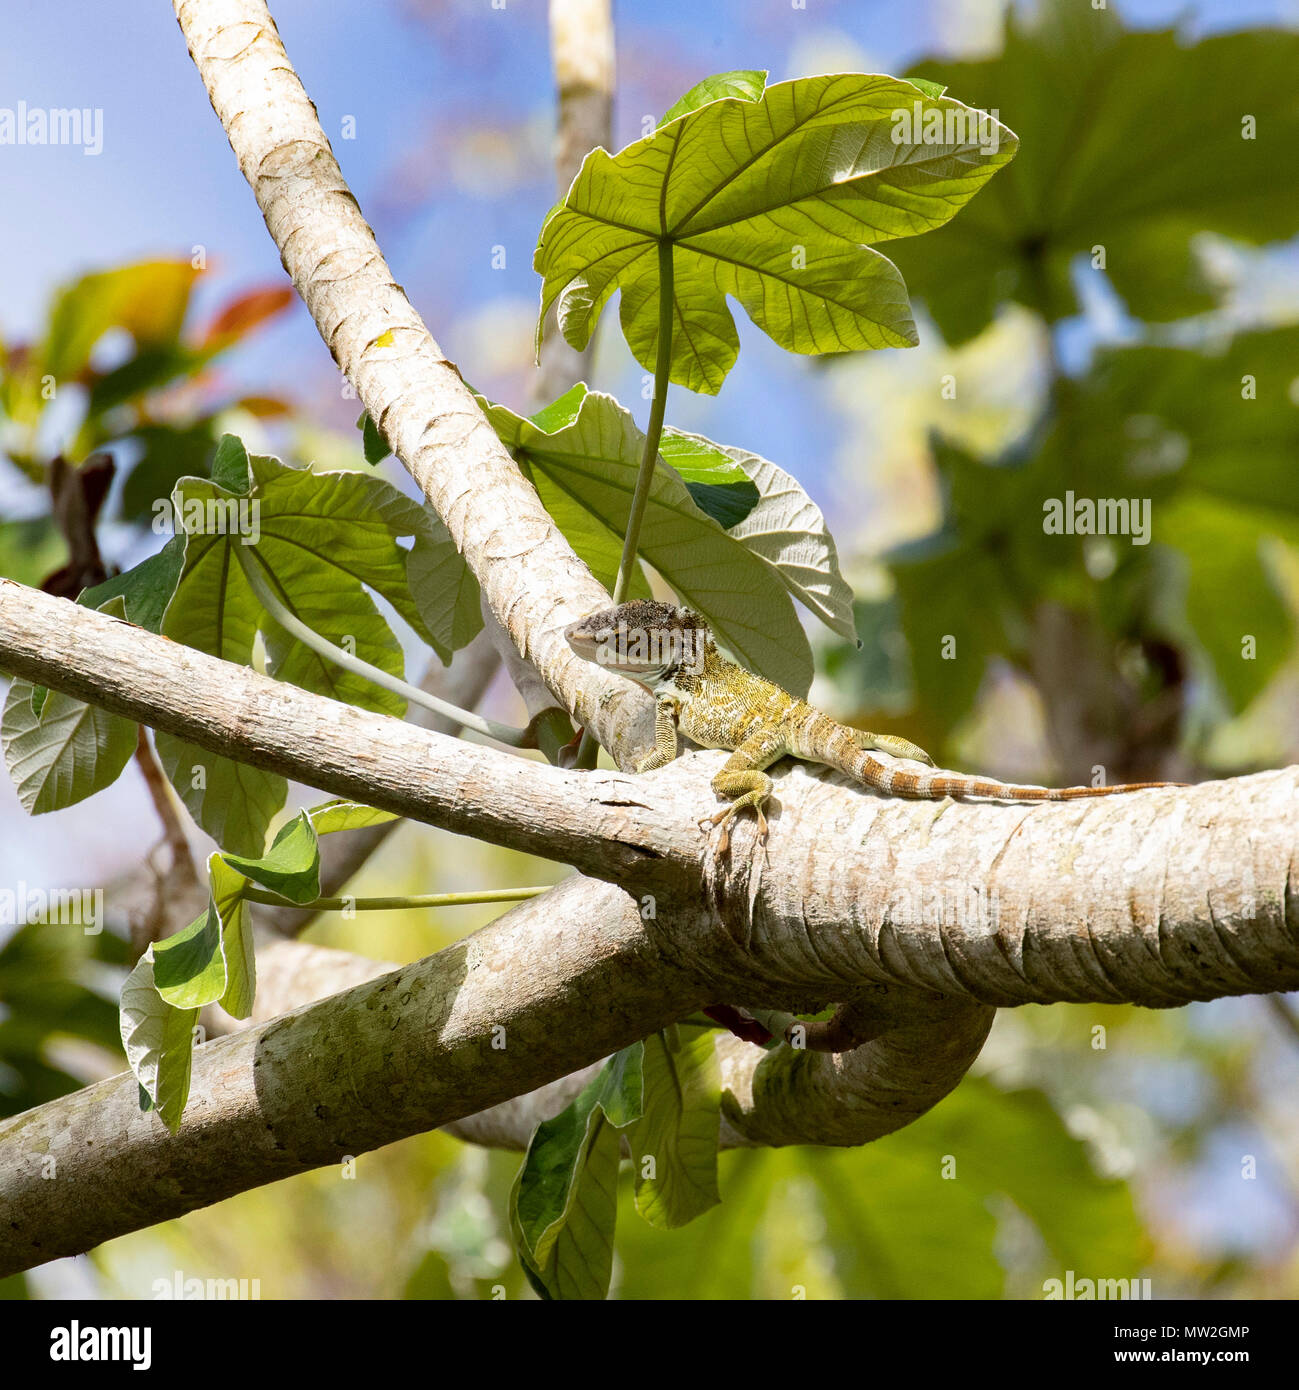 Cuban false chameleon resting on a branch Stock Photo